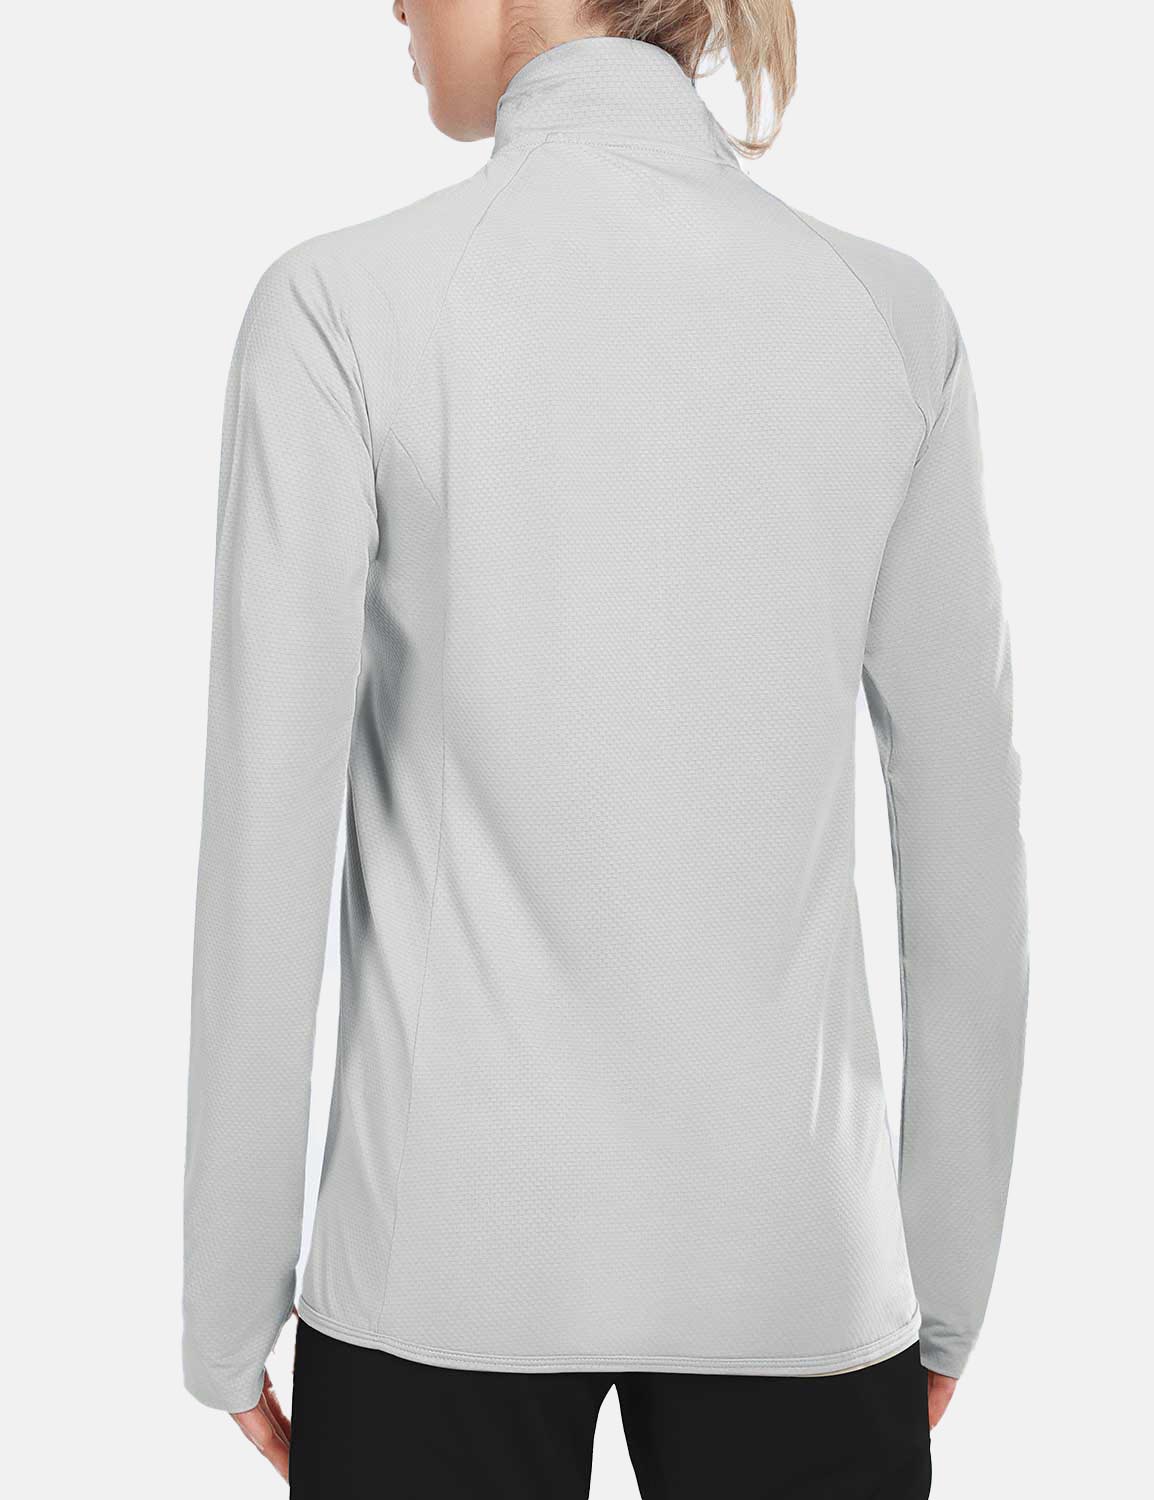 BALEAF Women's UPF 50+ Long Sleeve Zip Pocketed Lightweight Jackets cga018 Glacier Gray Back